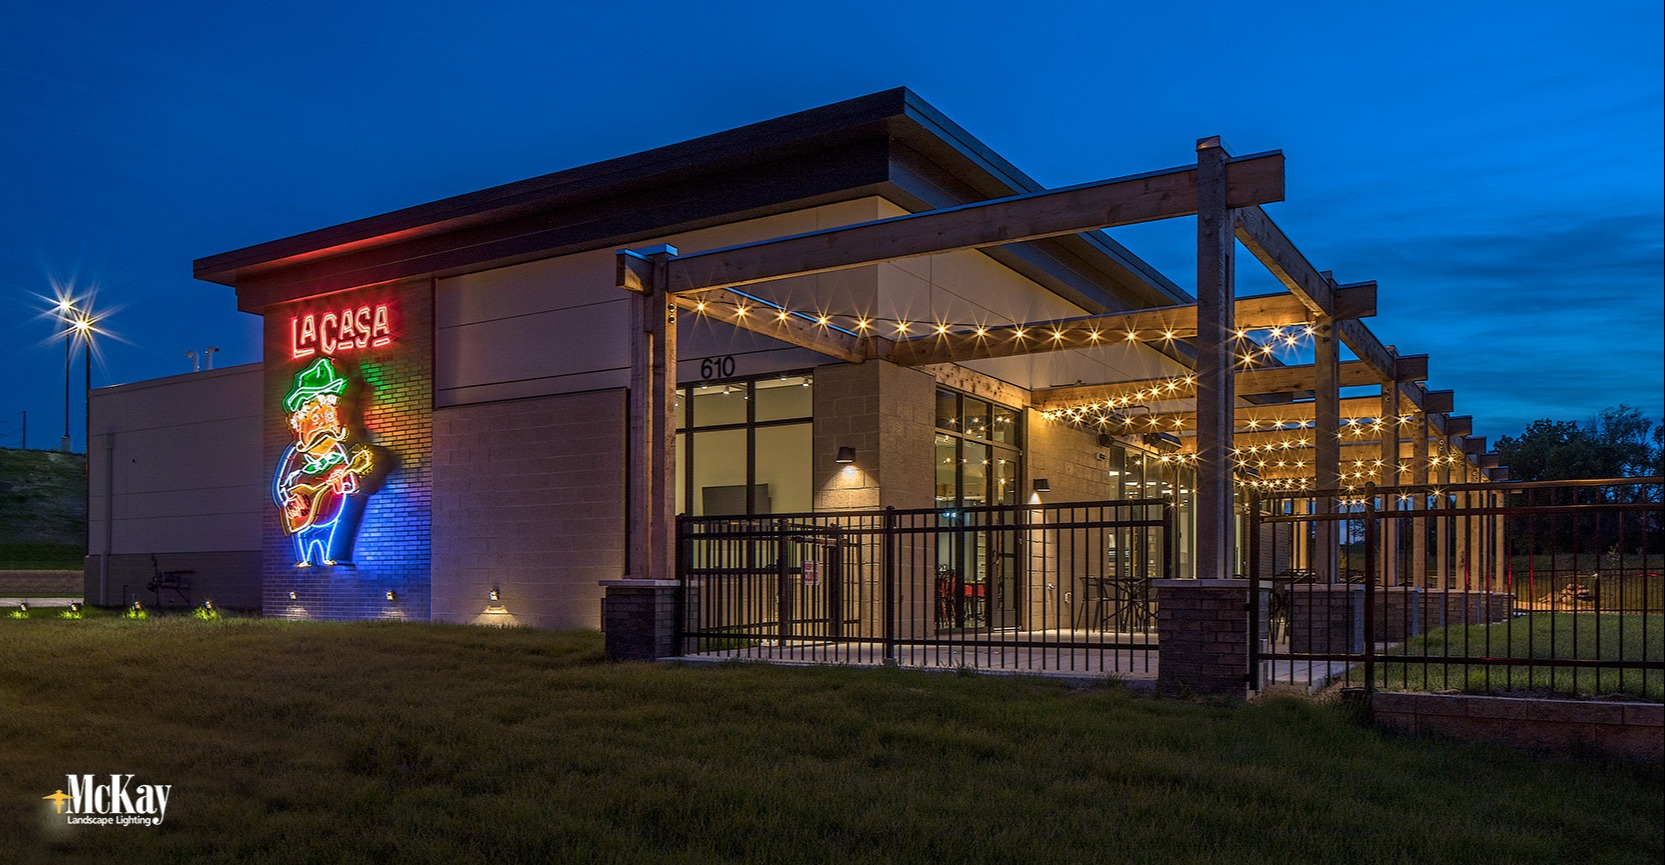 outdoor restaurant patio lighting omaha nebraska La Casa McKay Landscape LightingL 02